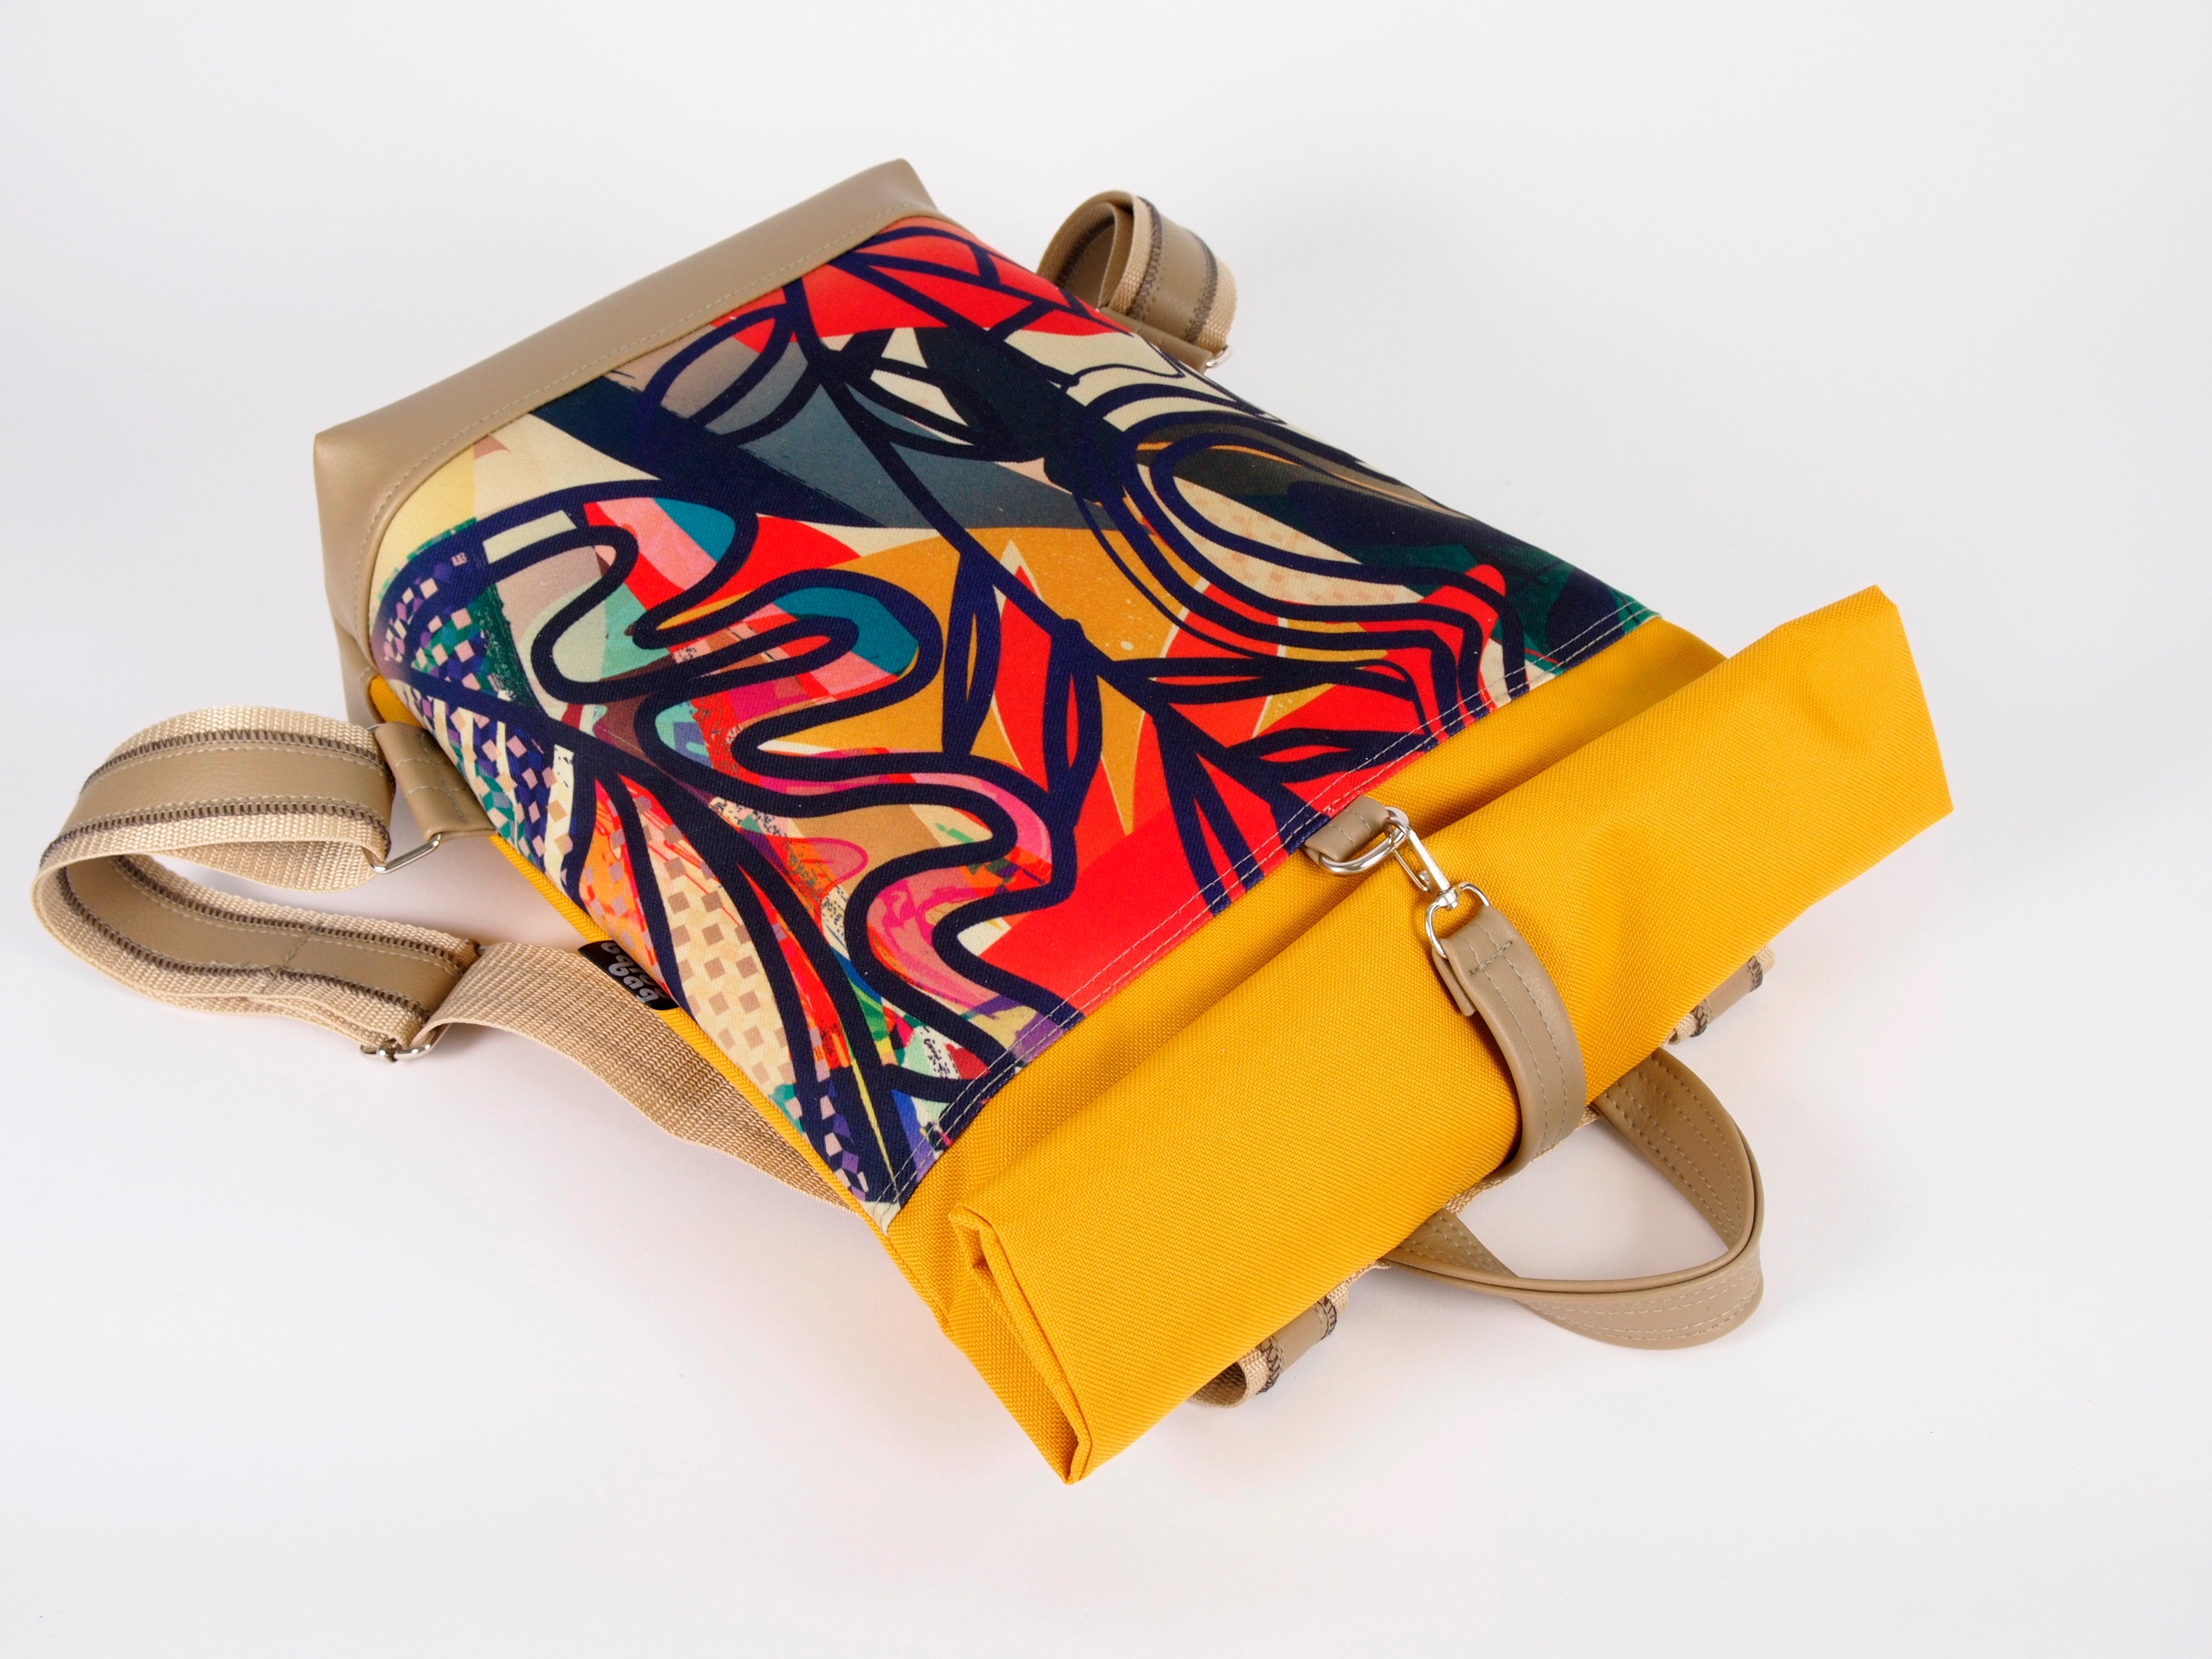 Bardo roll backpack - Summer abstraction - Premium Bardo backpack from BARDO ART WORKS - Just lvabstract, art, backpack, black, dance, dark blue, gift, handemade, jazz, orange, purple, red, tablet, urban style, vegan leather, woman85.00! Shop now at BARDO ART WORKS